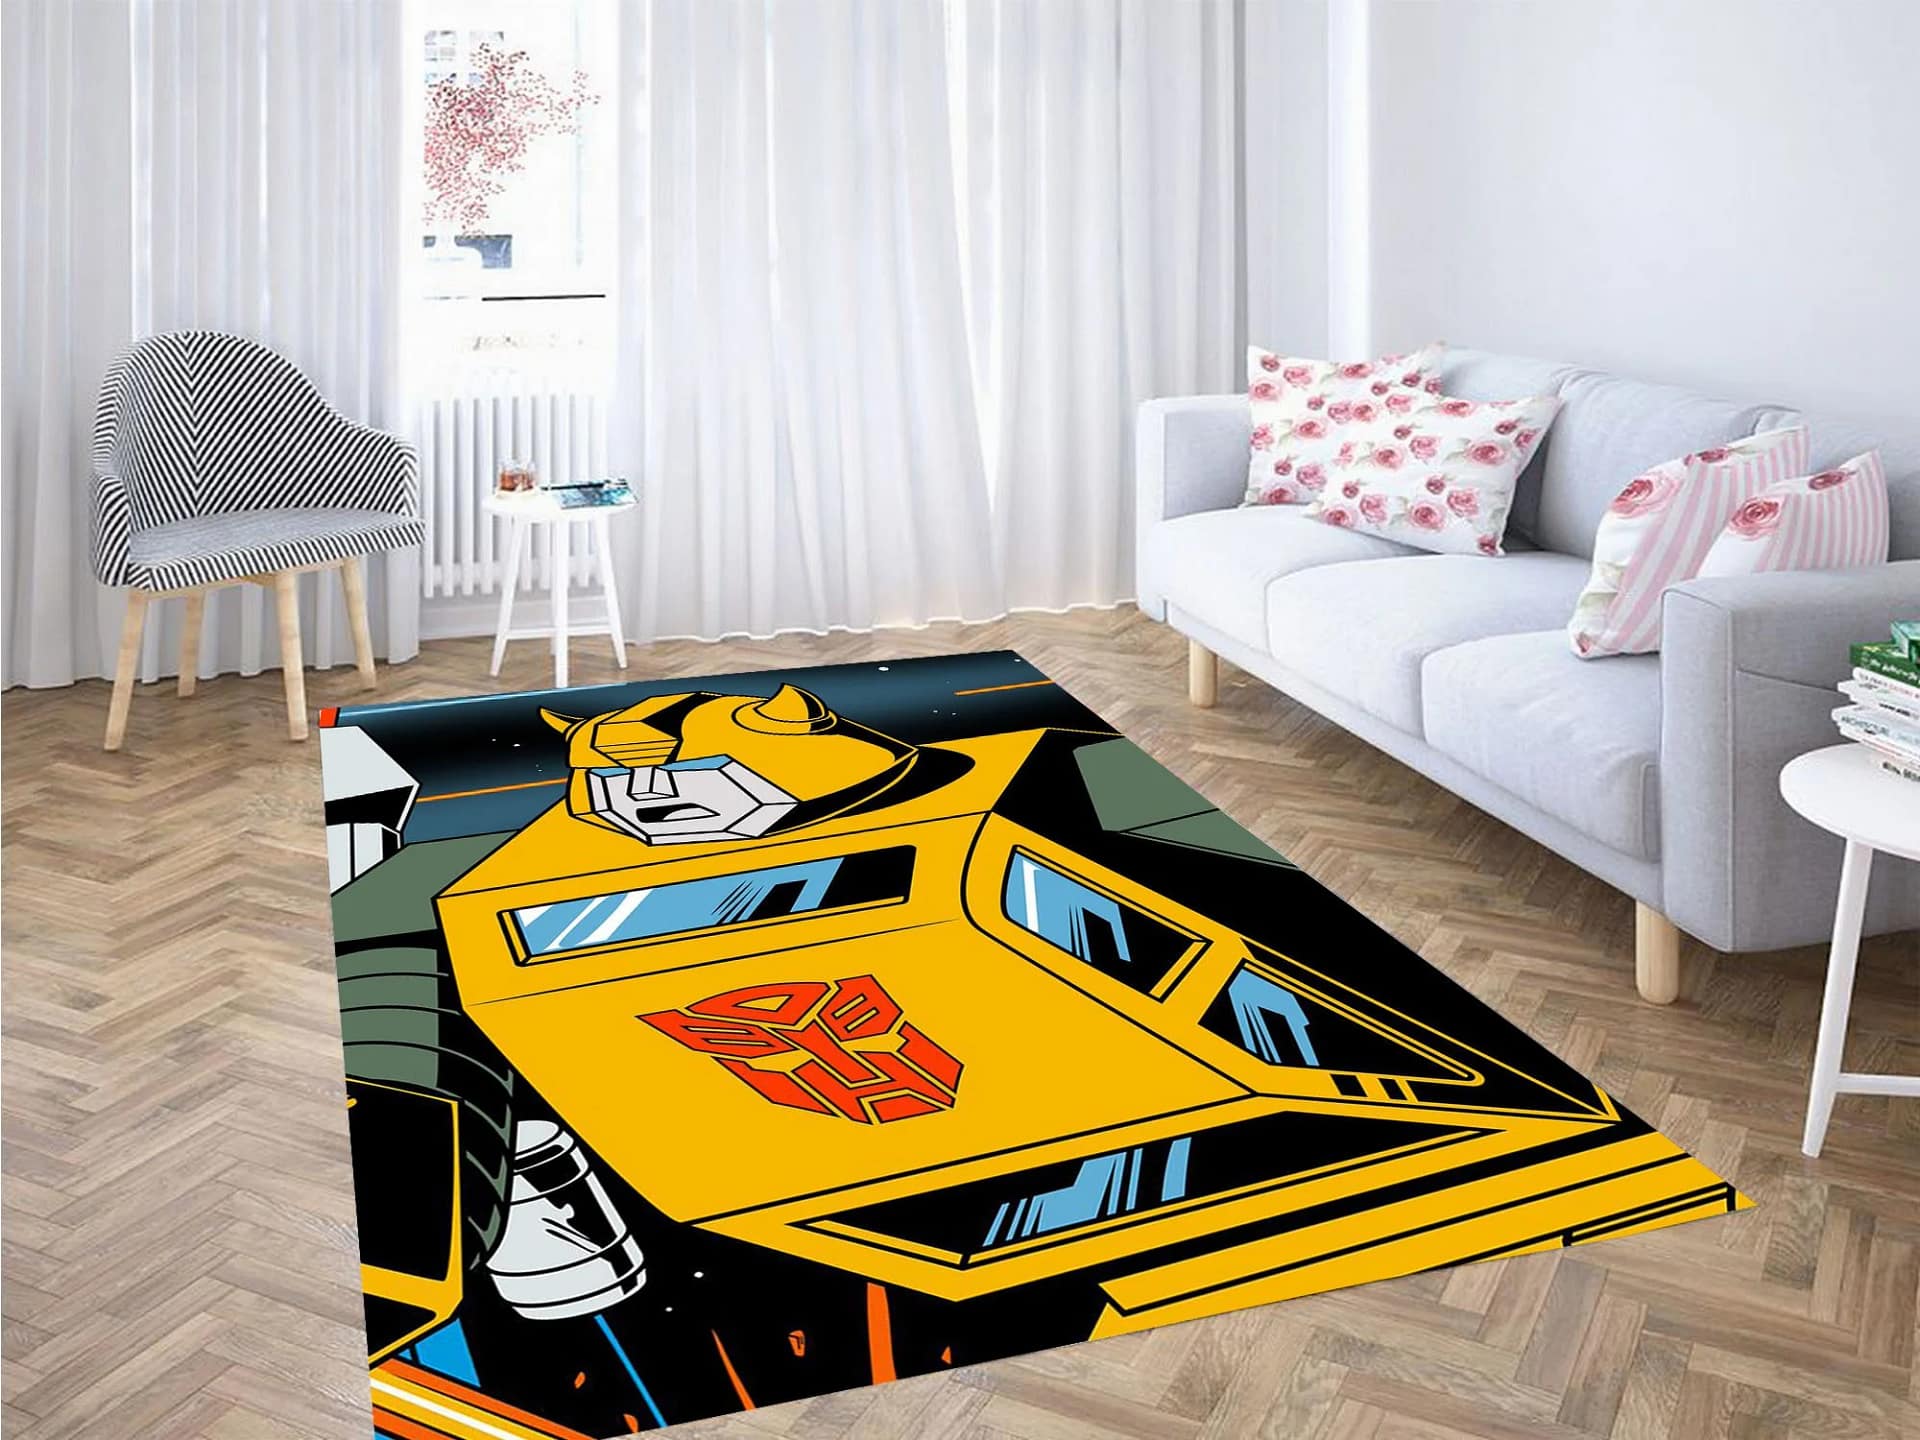 Art Transformers Primitive Skateboard Carpet Rug